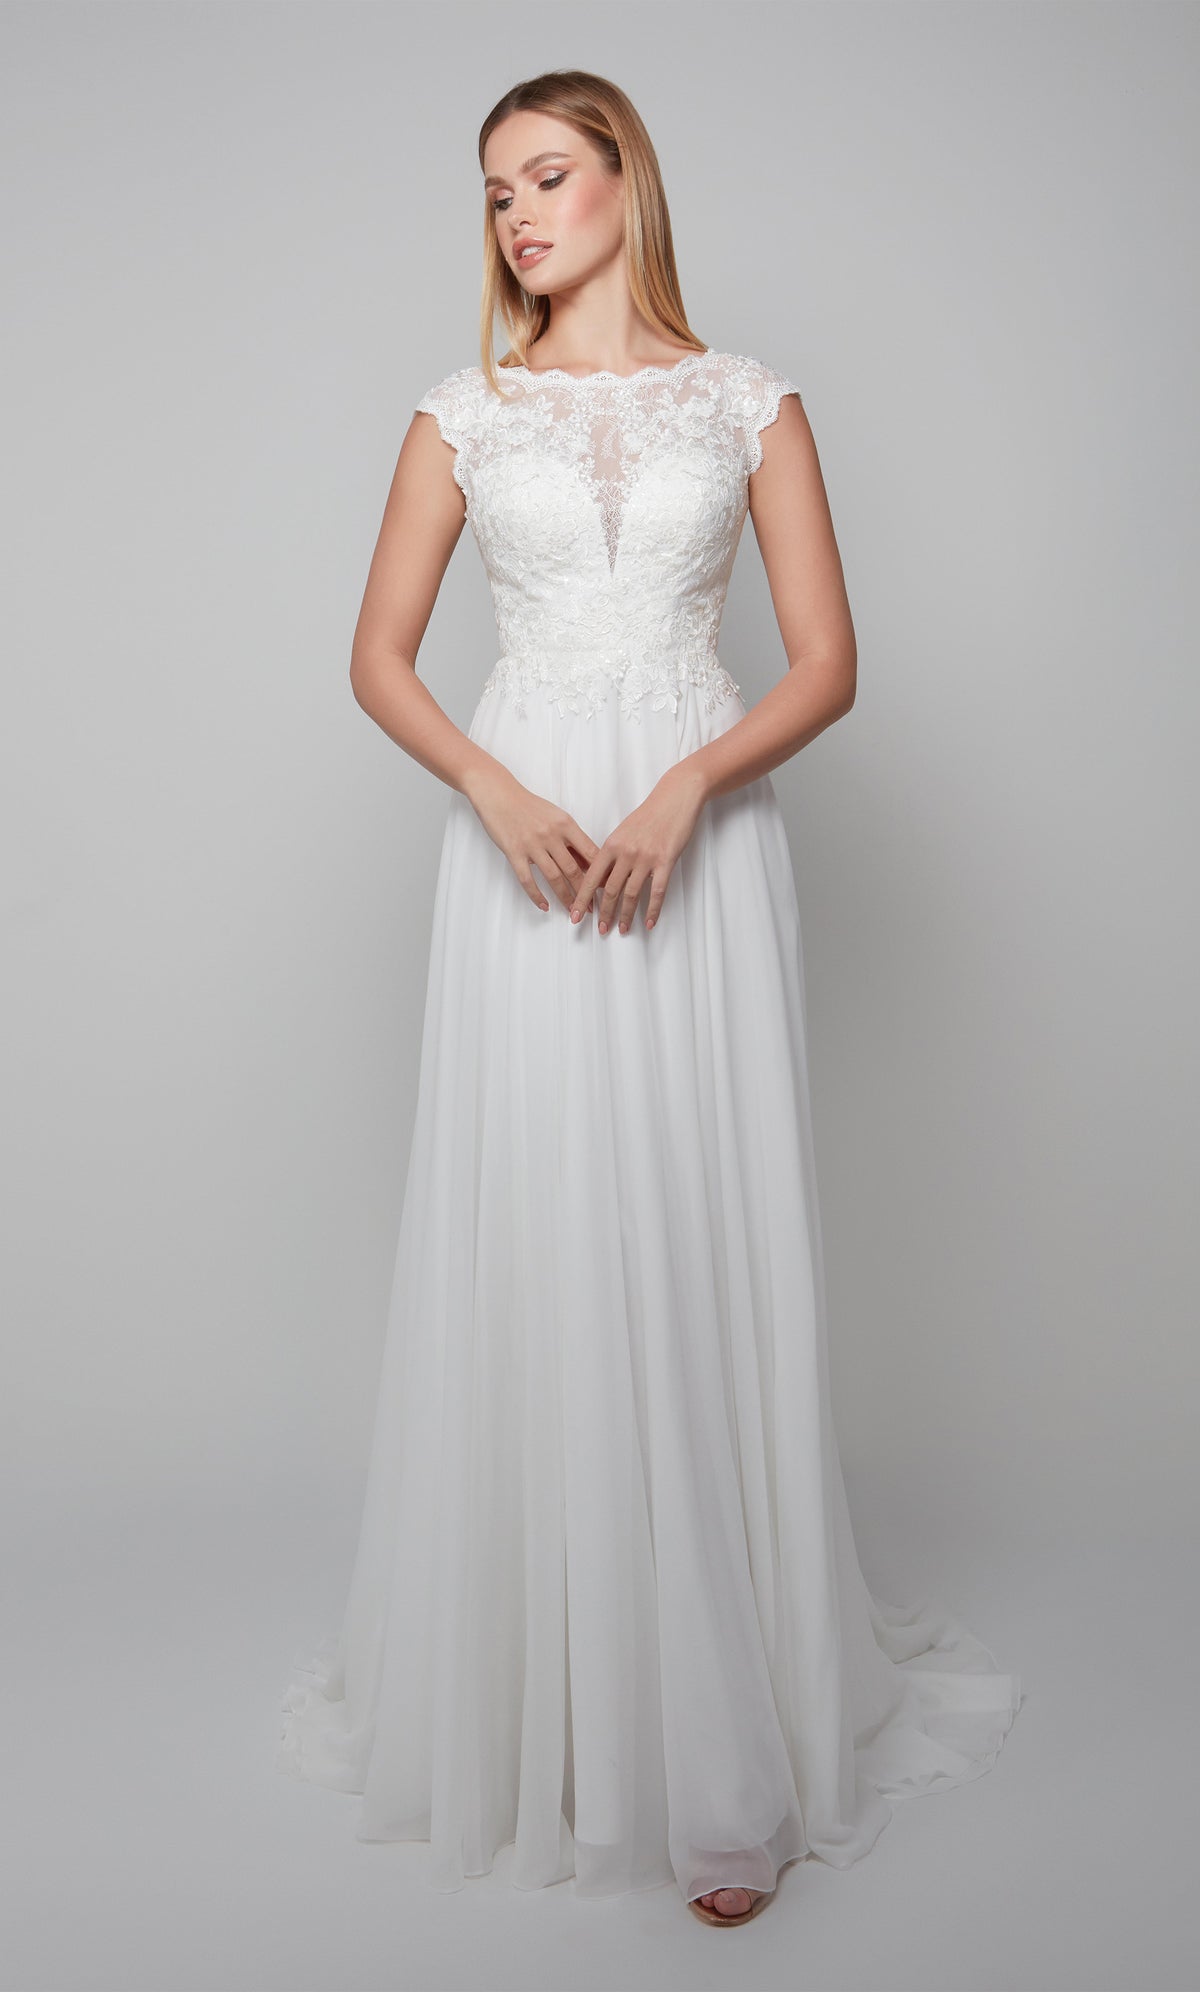 Classic wedding dress with elegant lace bodice and flowy chiffon skirt. Color-SWATCH_7073__DIAMOND-WHITE